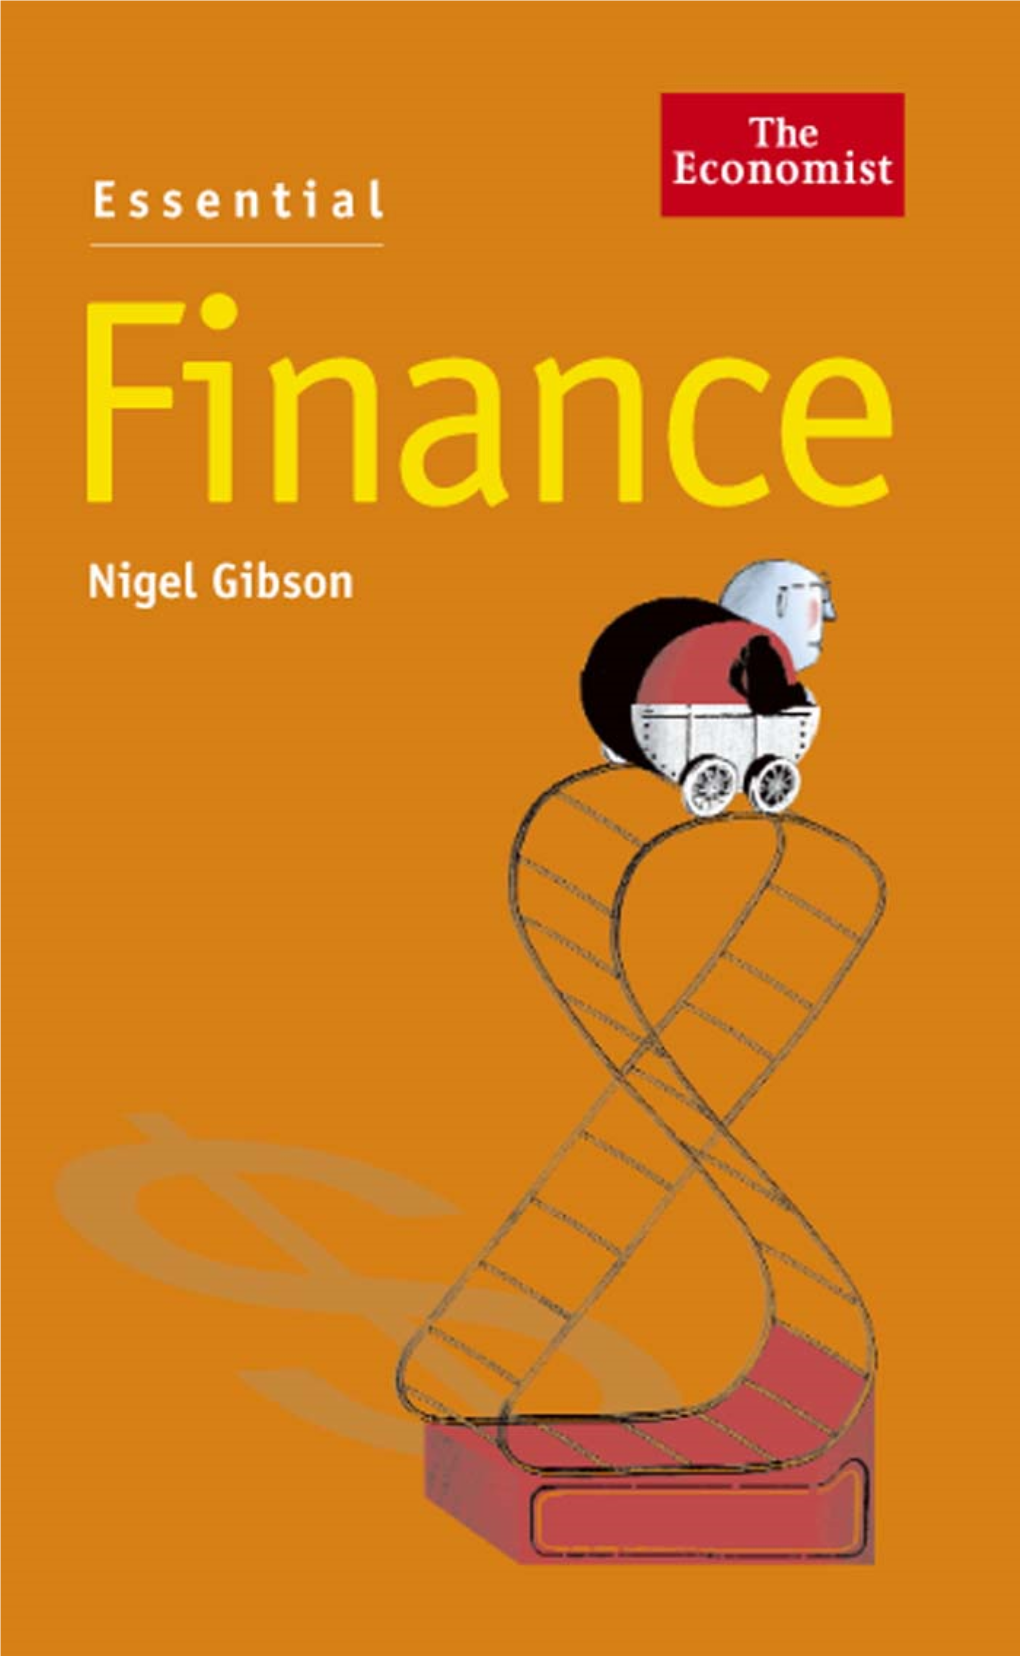 FINANCE Essencial Finance.Pdf